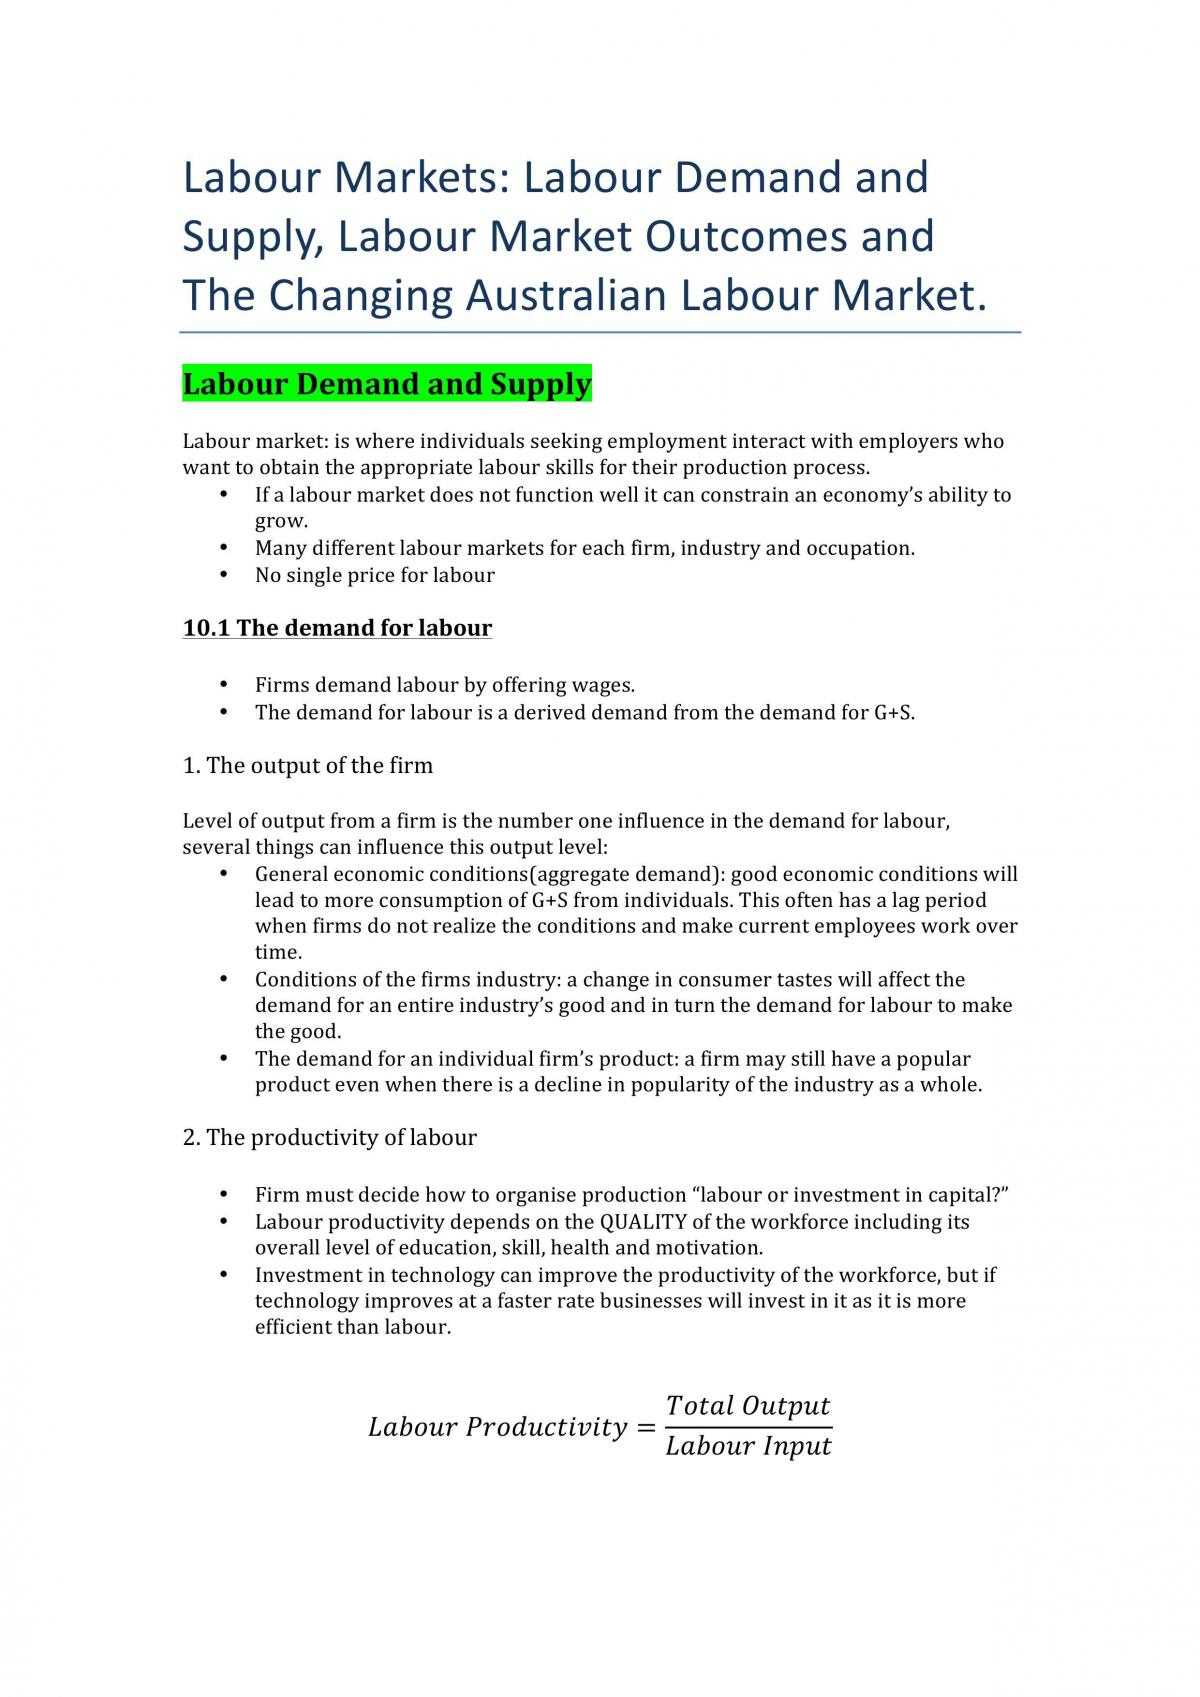 the labor market essay